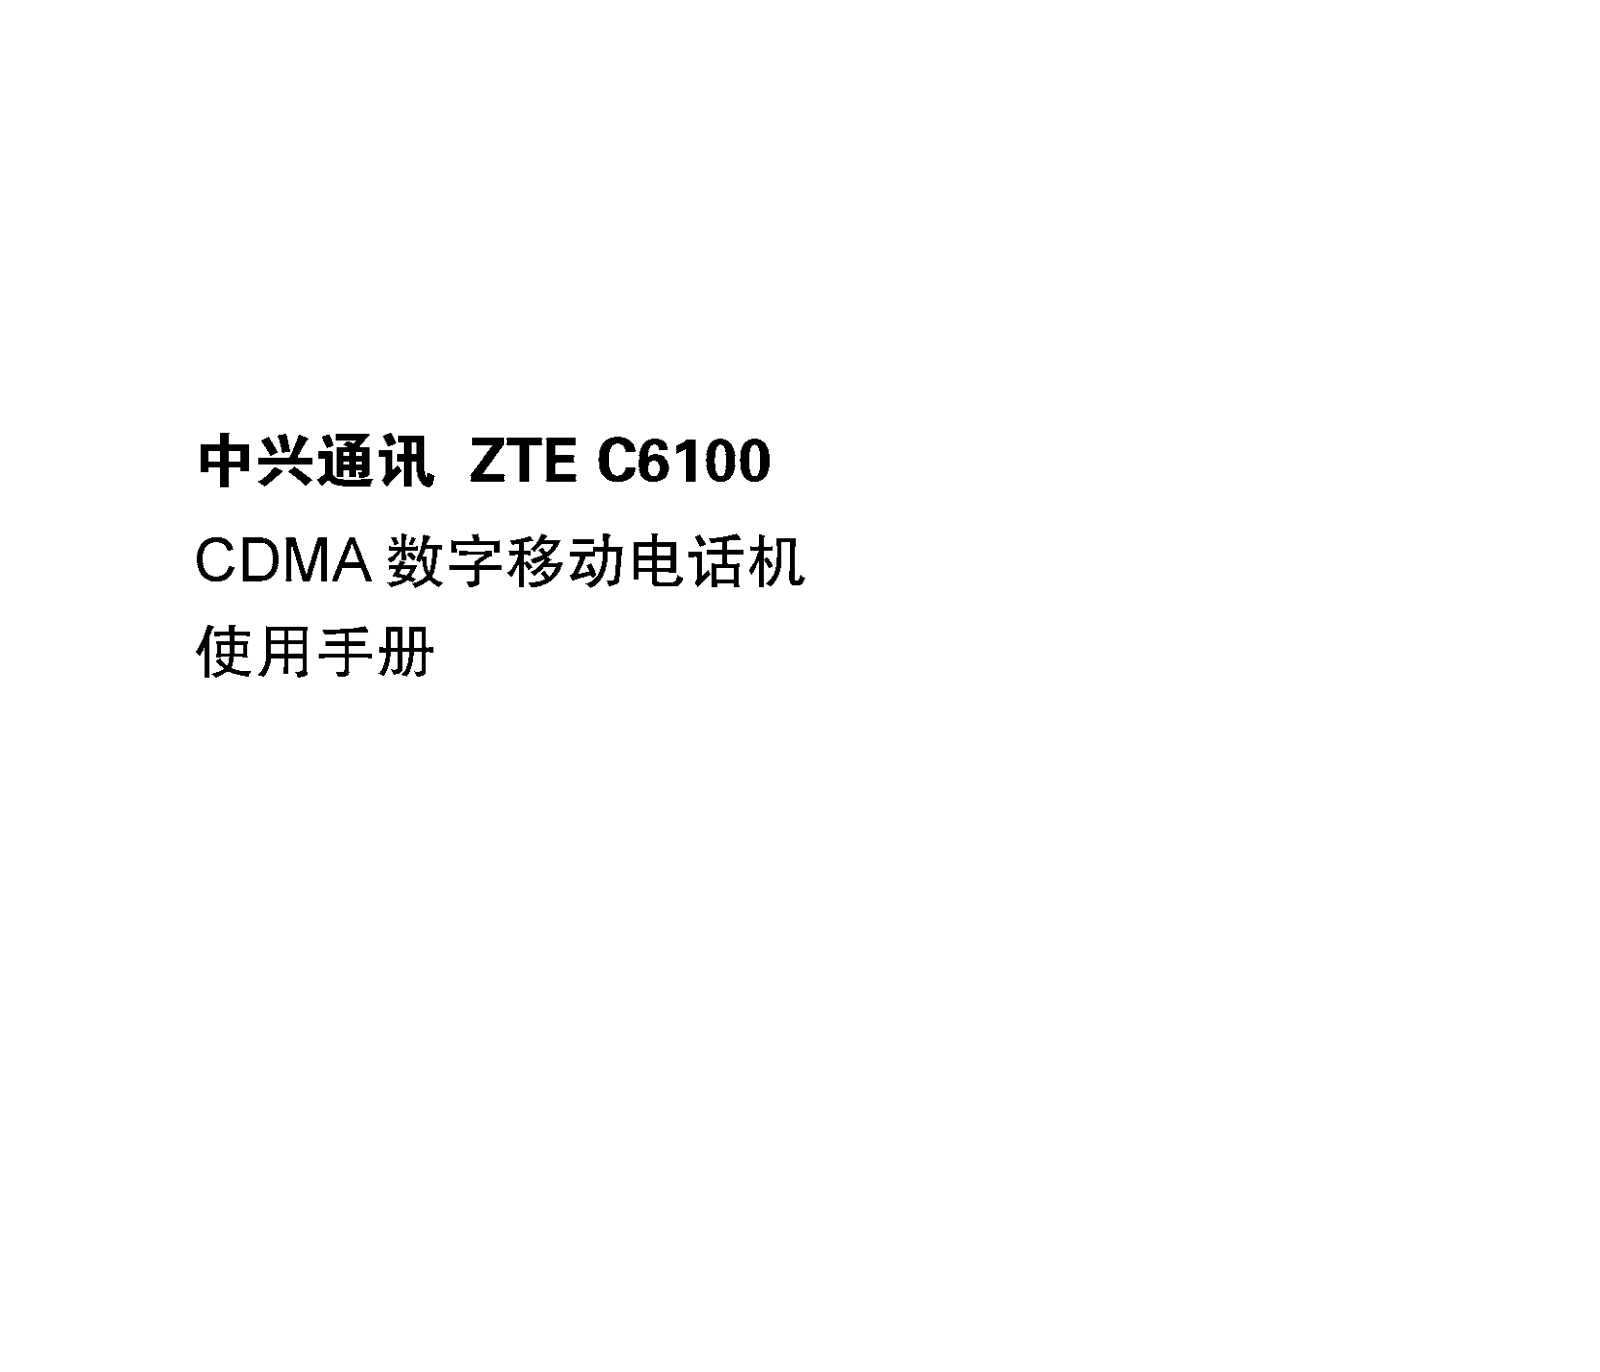 ZTE C6100 User Manual